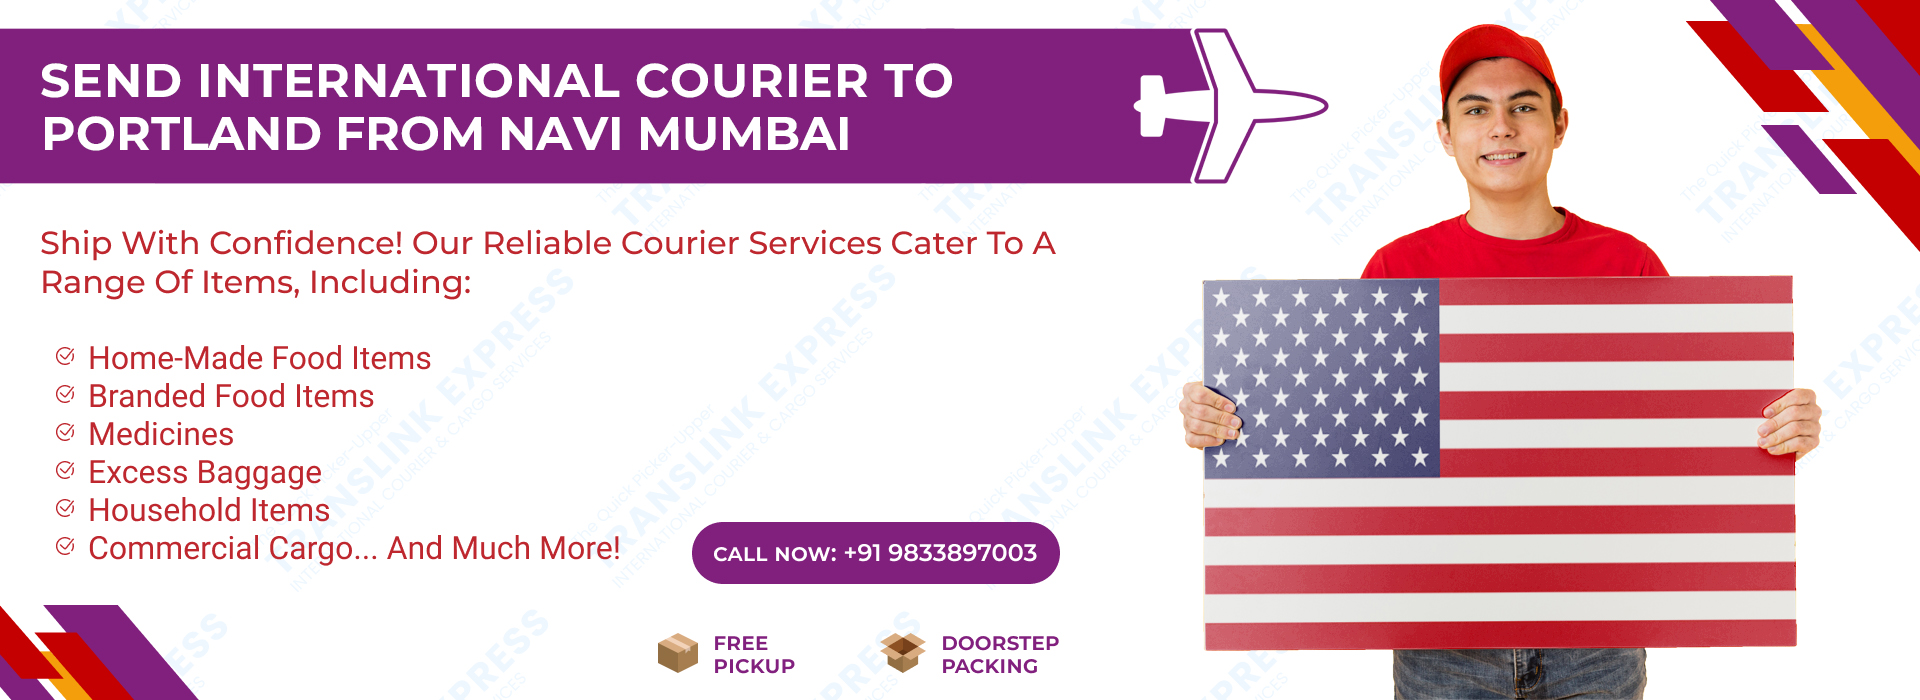 Courier to Portland From Navi Mumbai